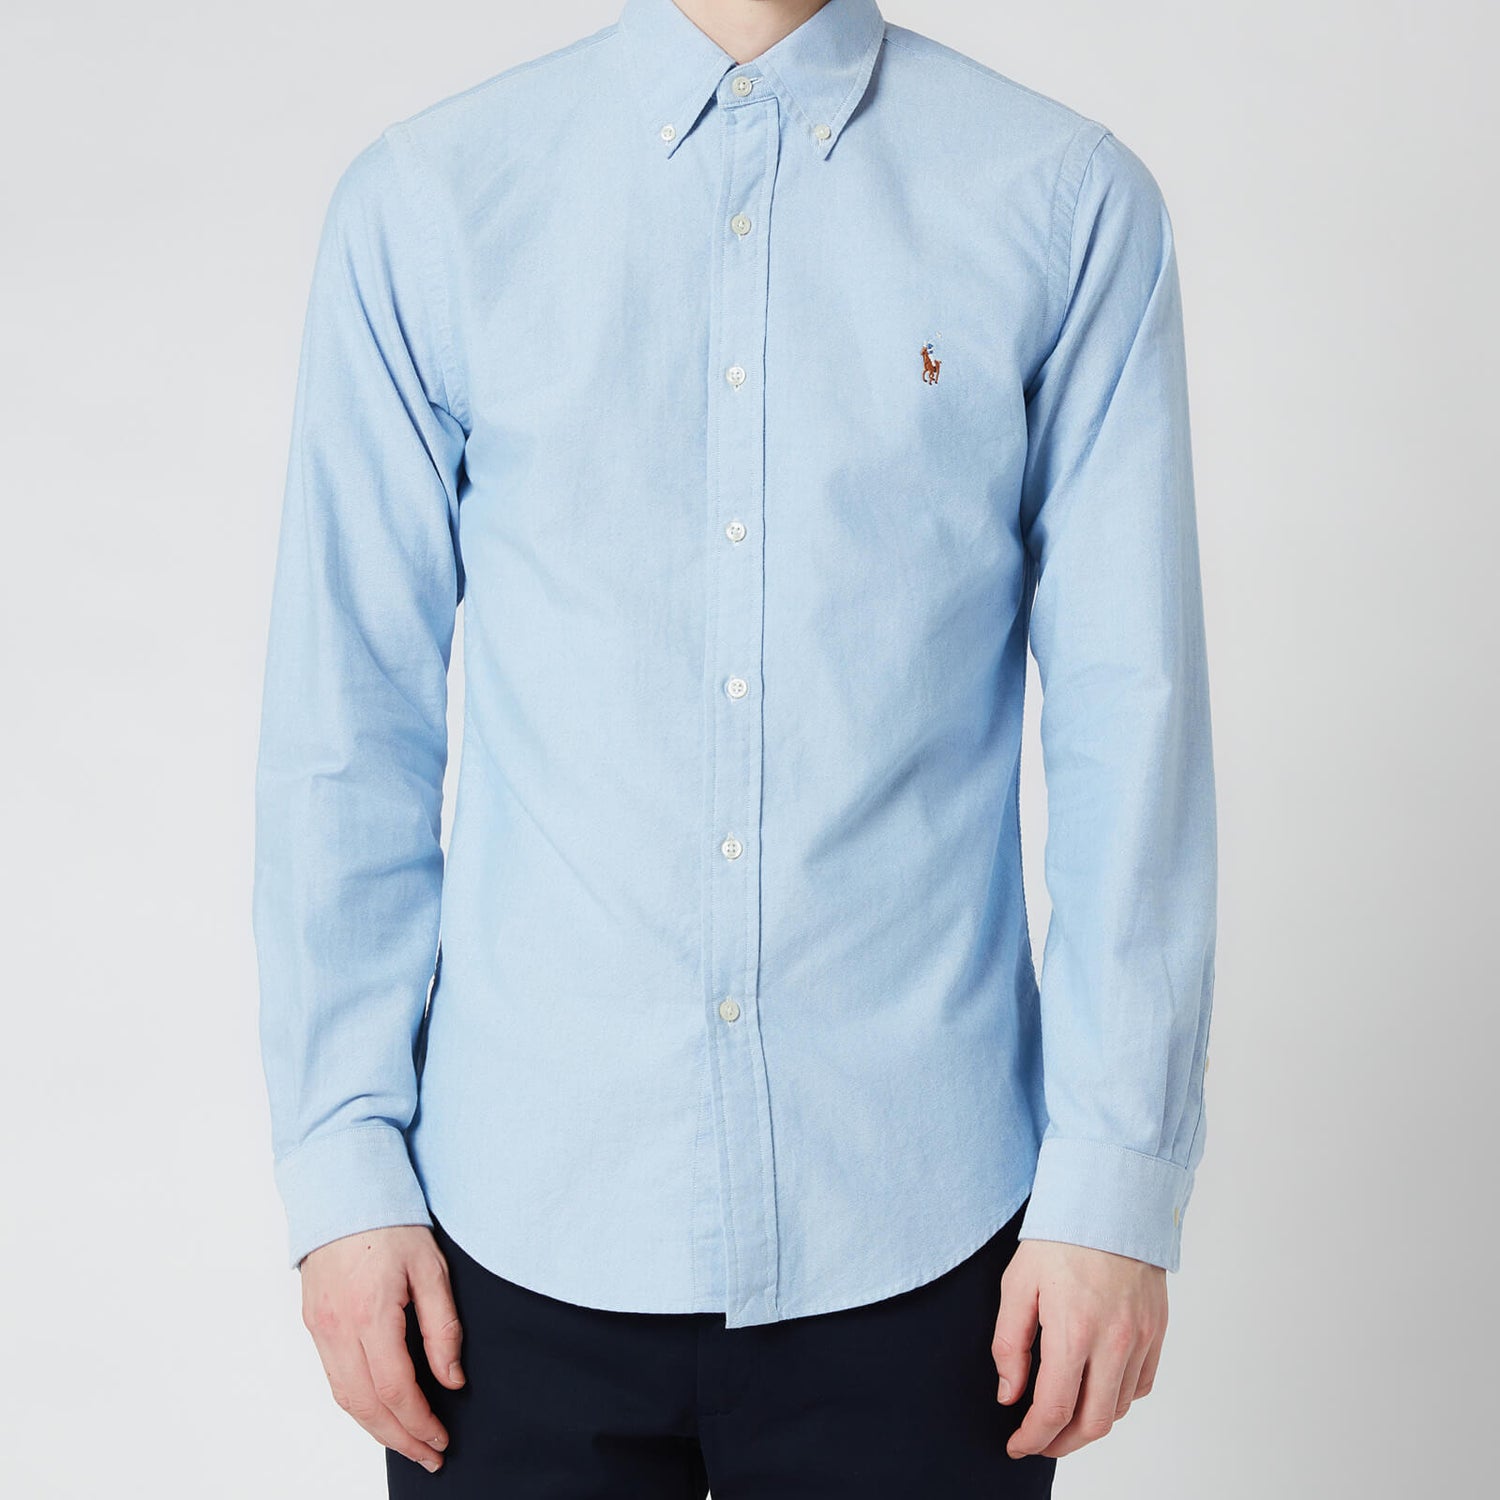 Polo Ralph Lauren Men's Slim Fit Oxford Long Sleeve Shirt - BSR Blue - S